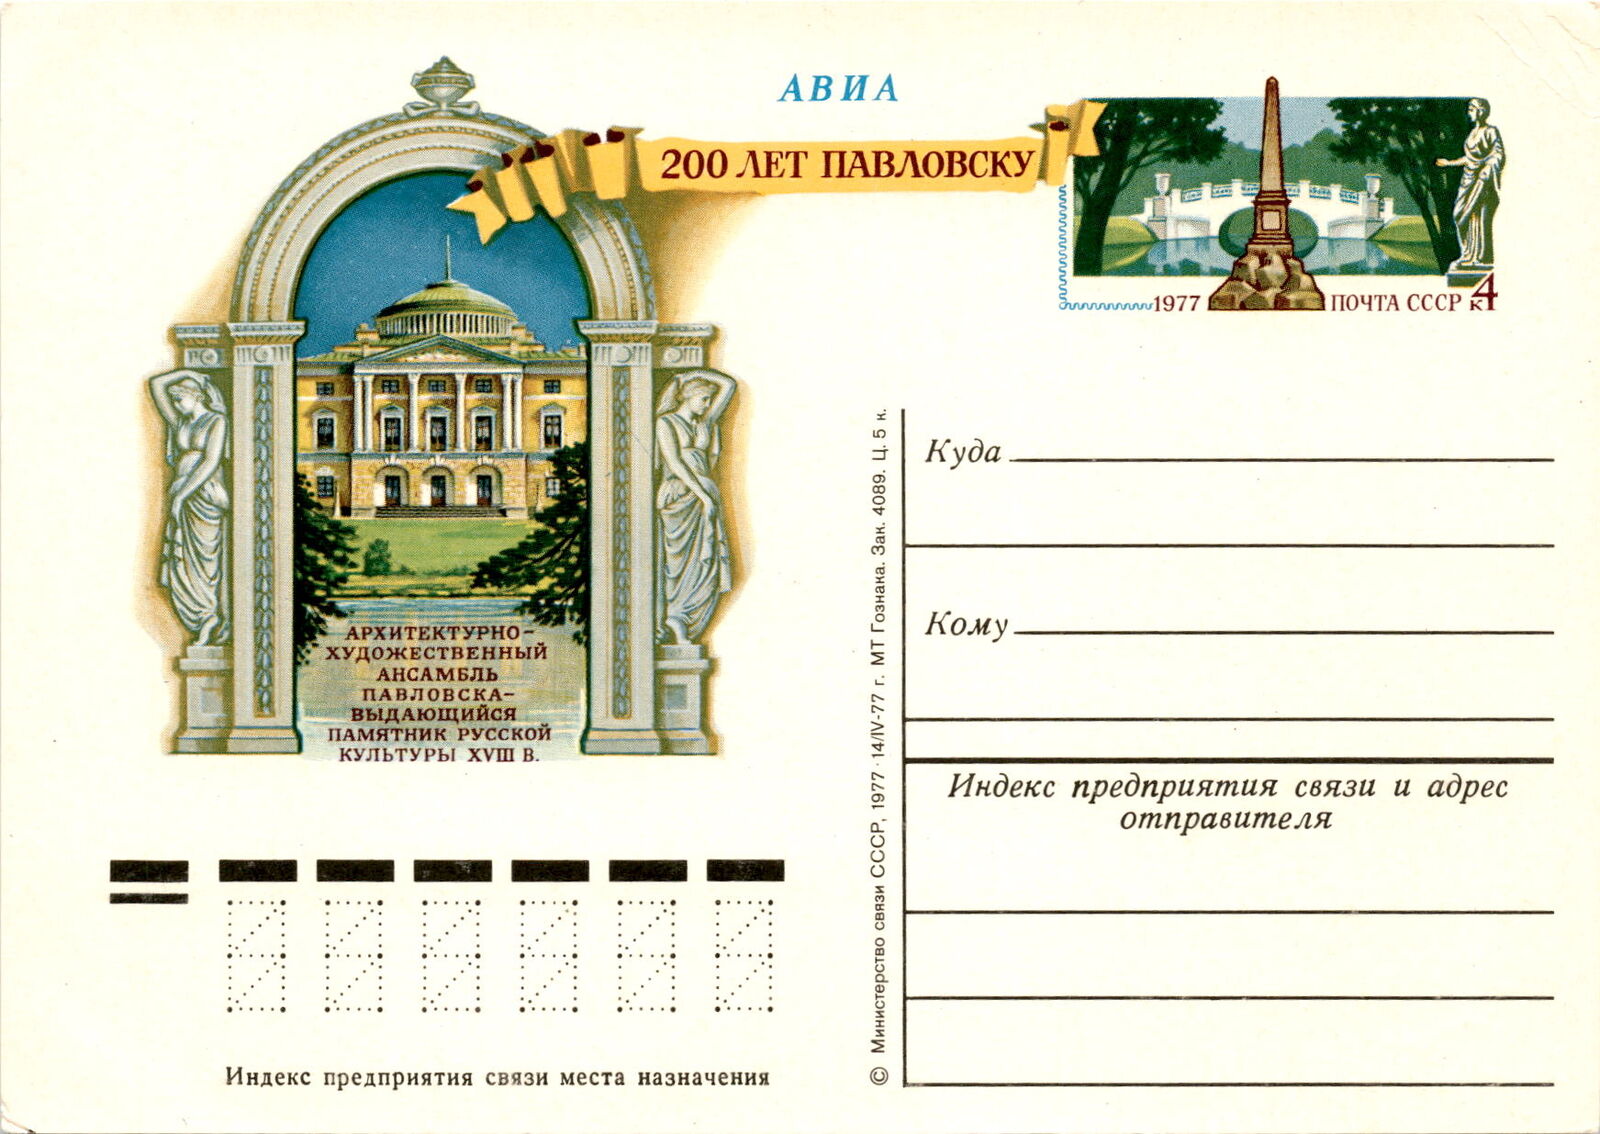 Pavlovsk, Russia, Vasily Bazhenov, historic buildings, gardens, Postcard